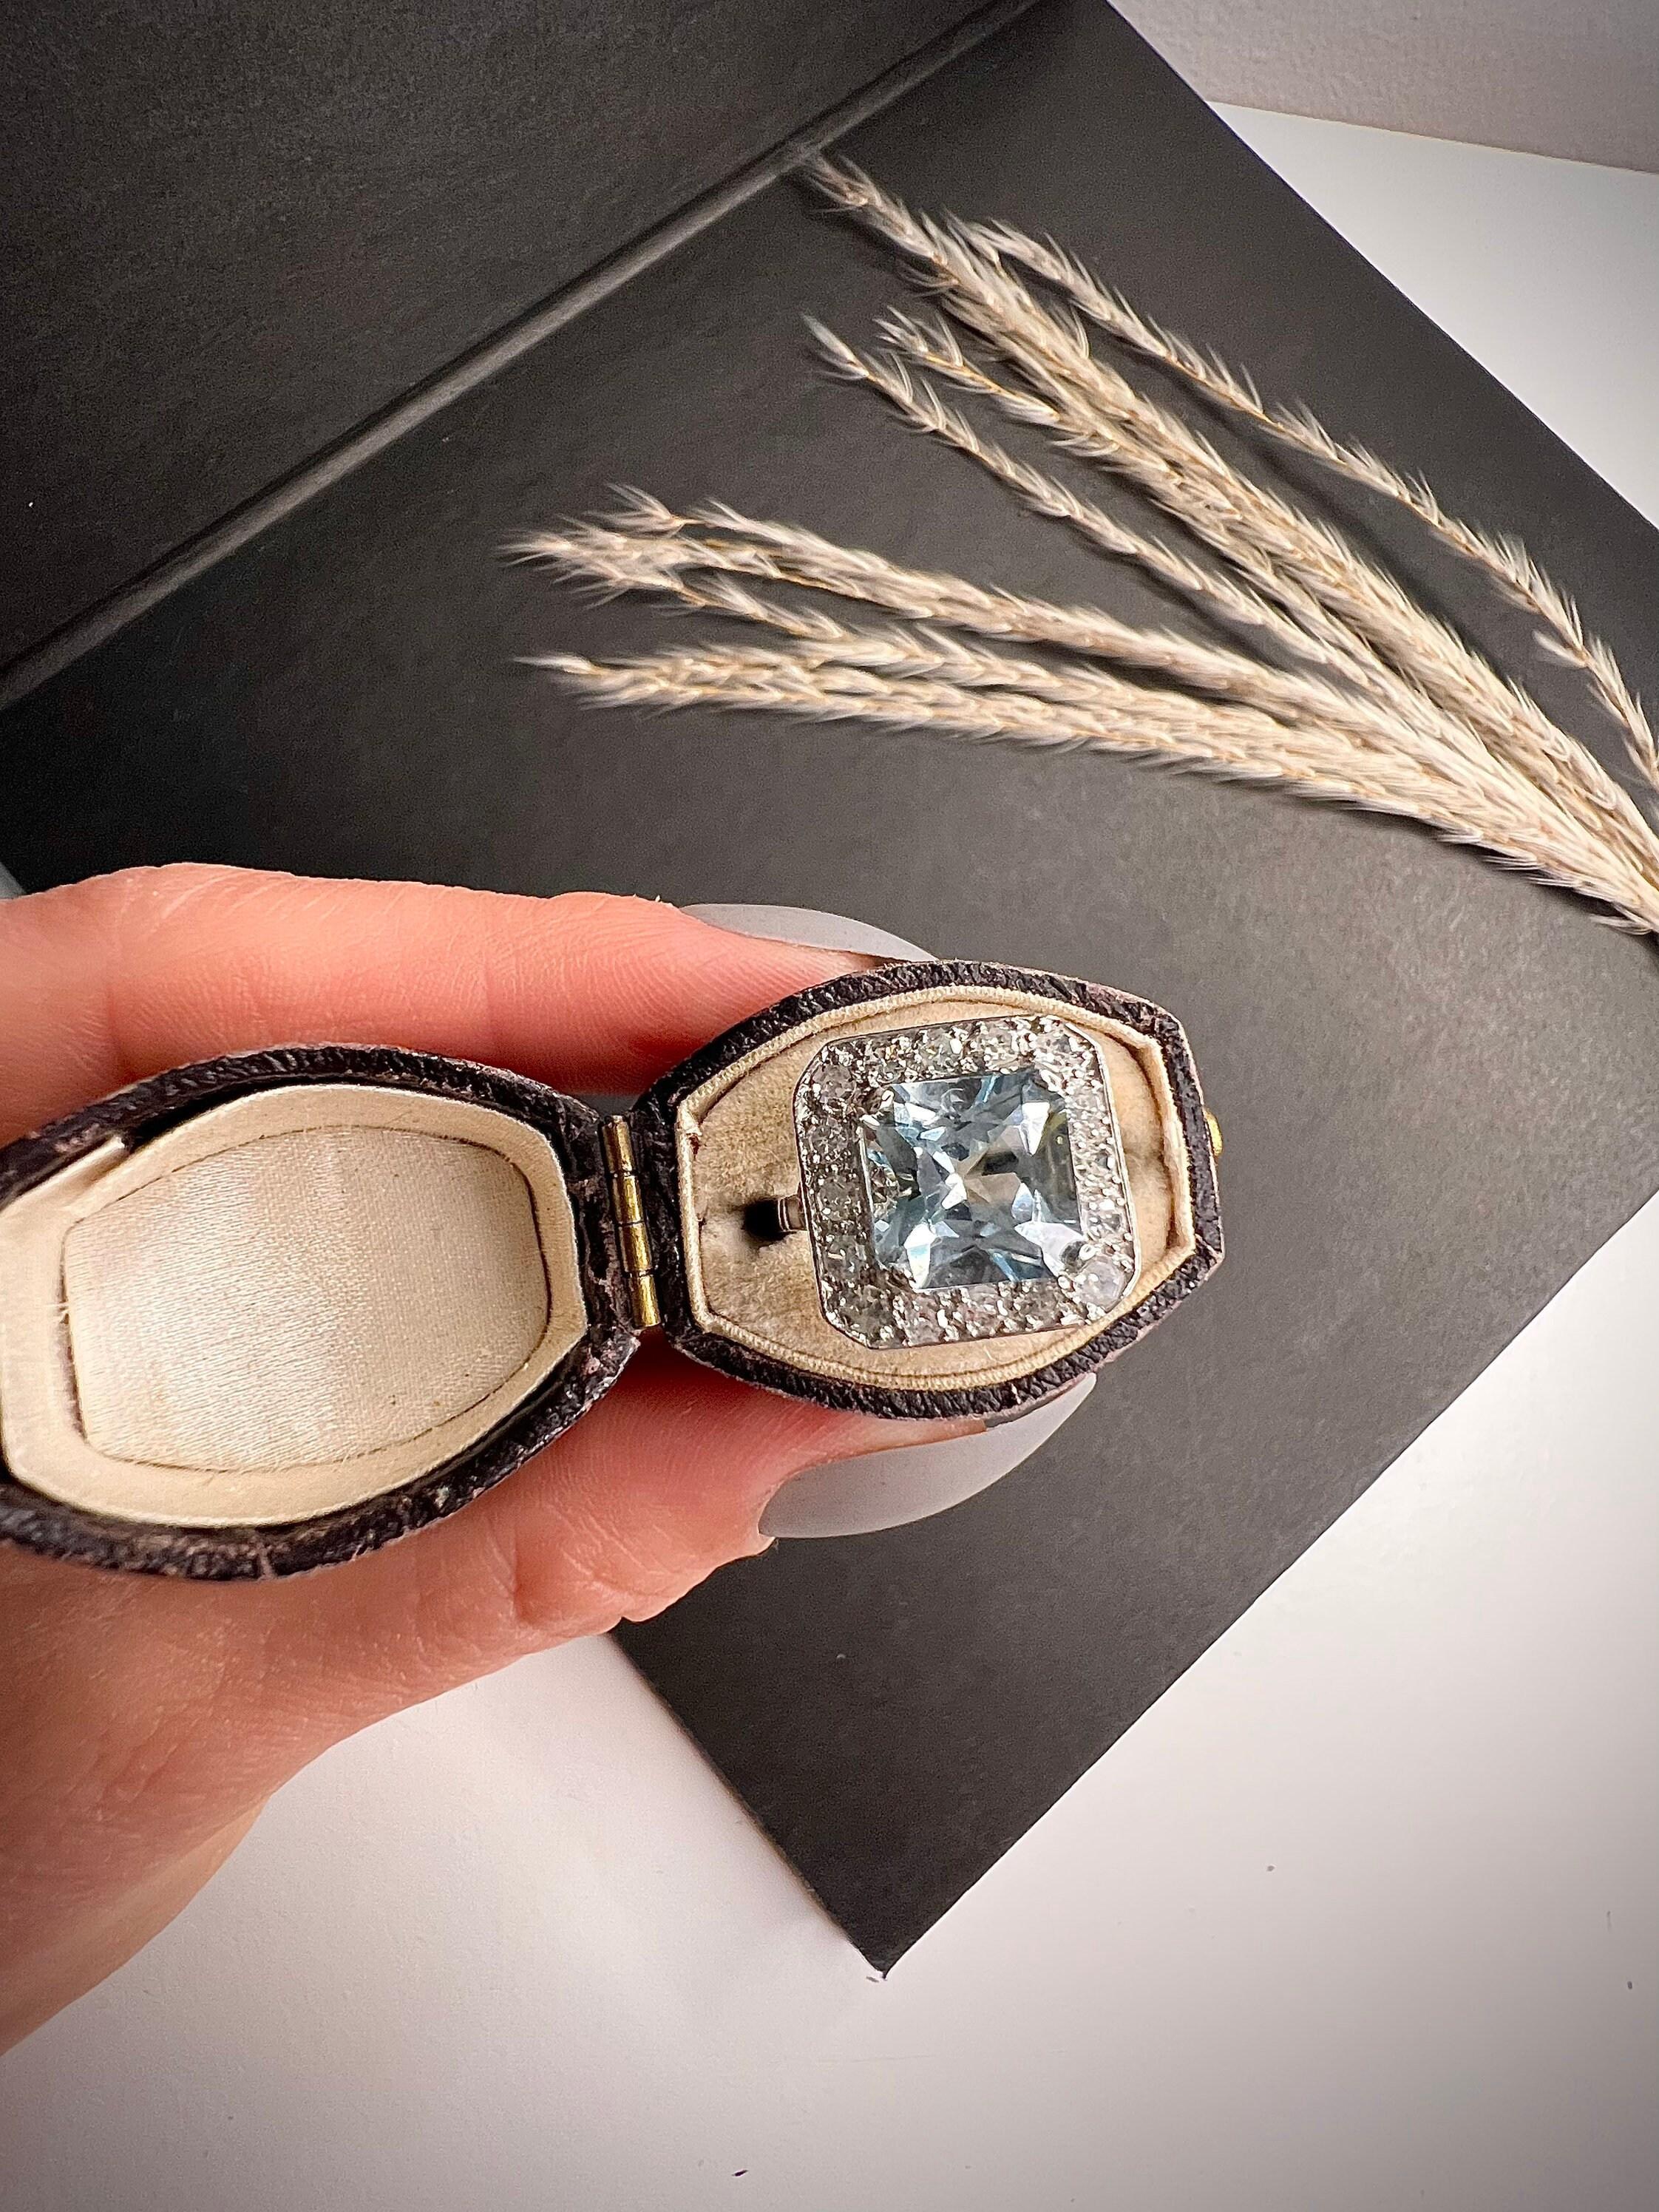 Antique Square Cut Aquamarine Ring

18ct White Gold 

Circa 1920’s 

Fabulous Square Cut Aquamarine Set with a Beautiful Halo of 8 Cut Diamonds 

Face of The Ring Measures Approx 14.2mm x 14.2mm 

Aquamarine Measures Approx 8.5mm x 8.5mm

Diamond